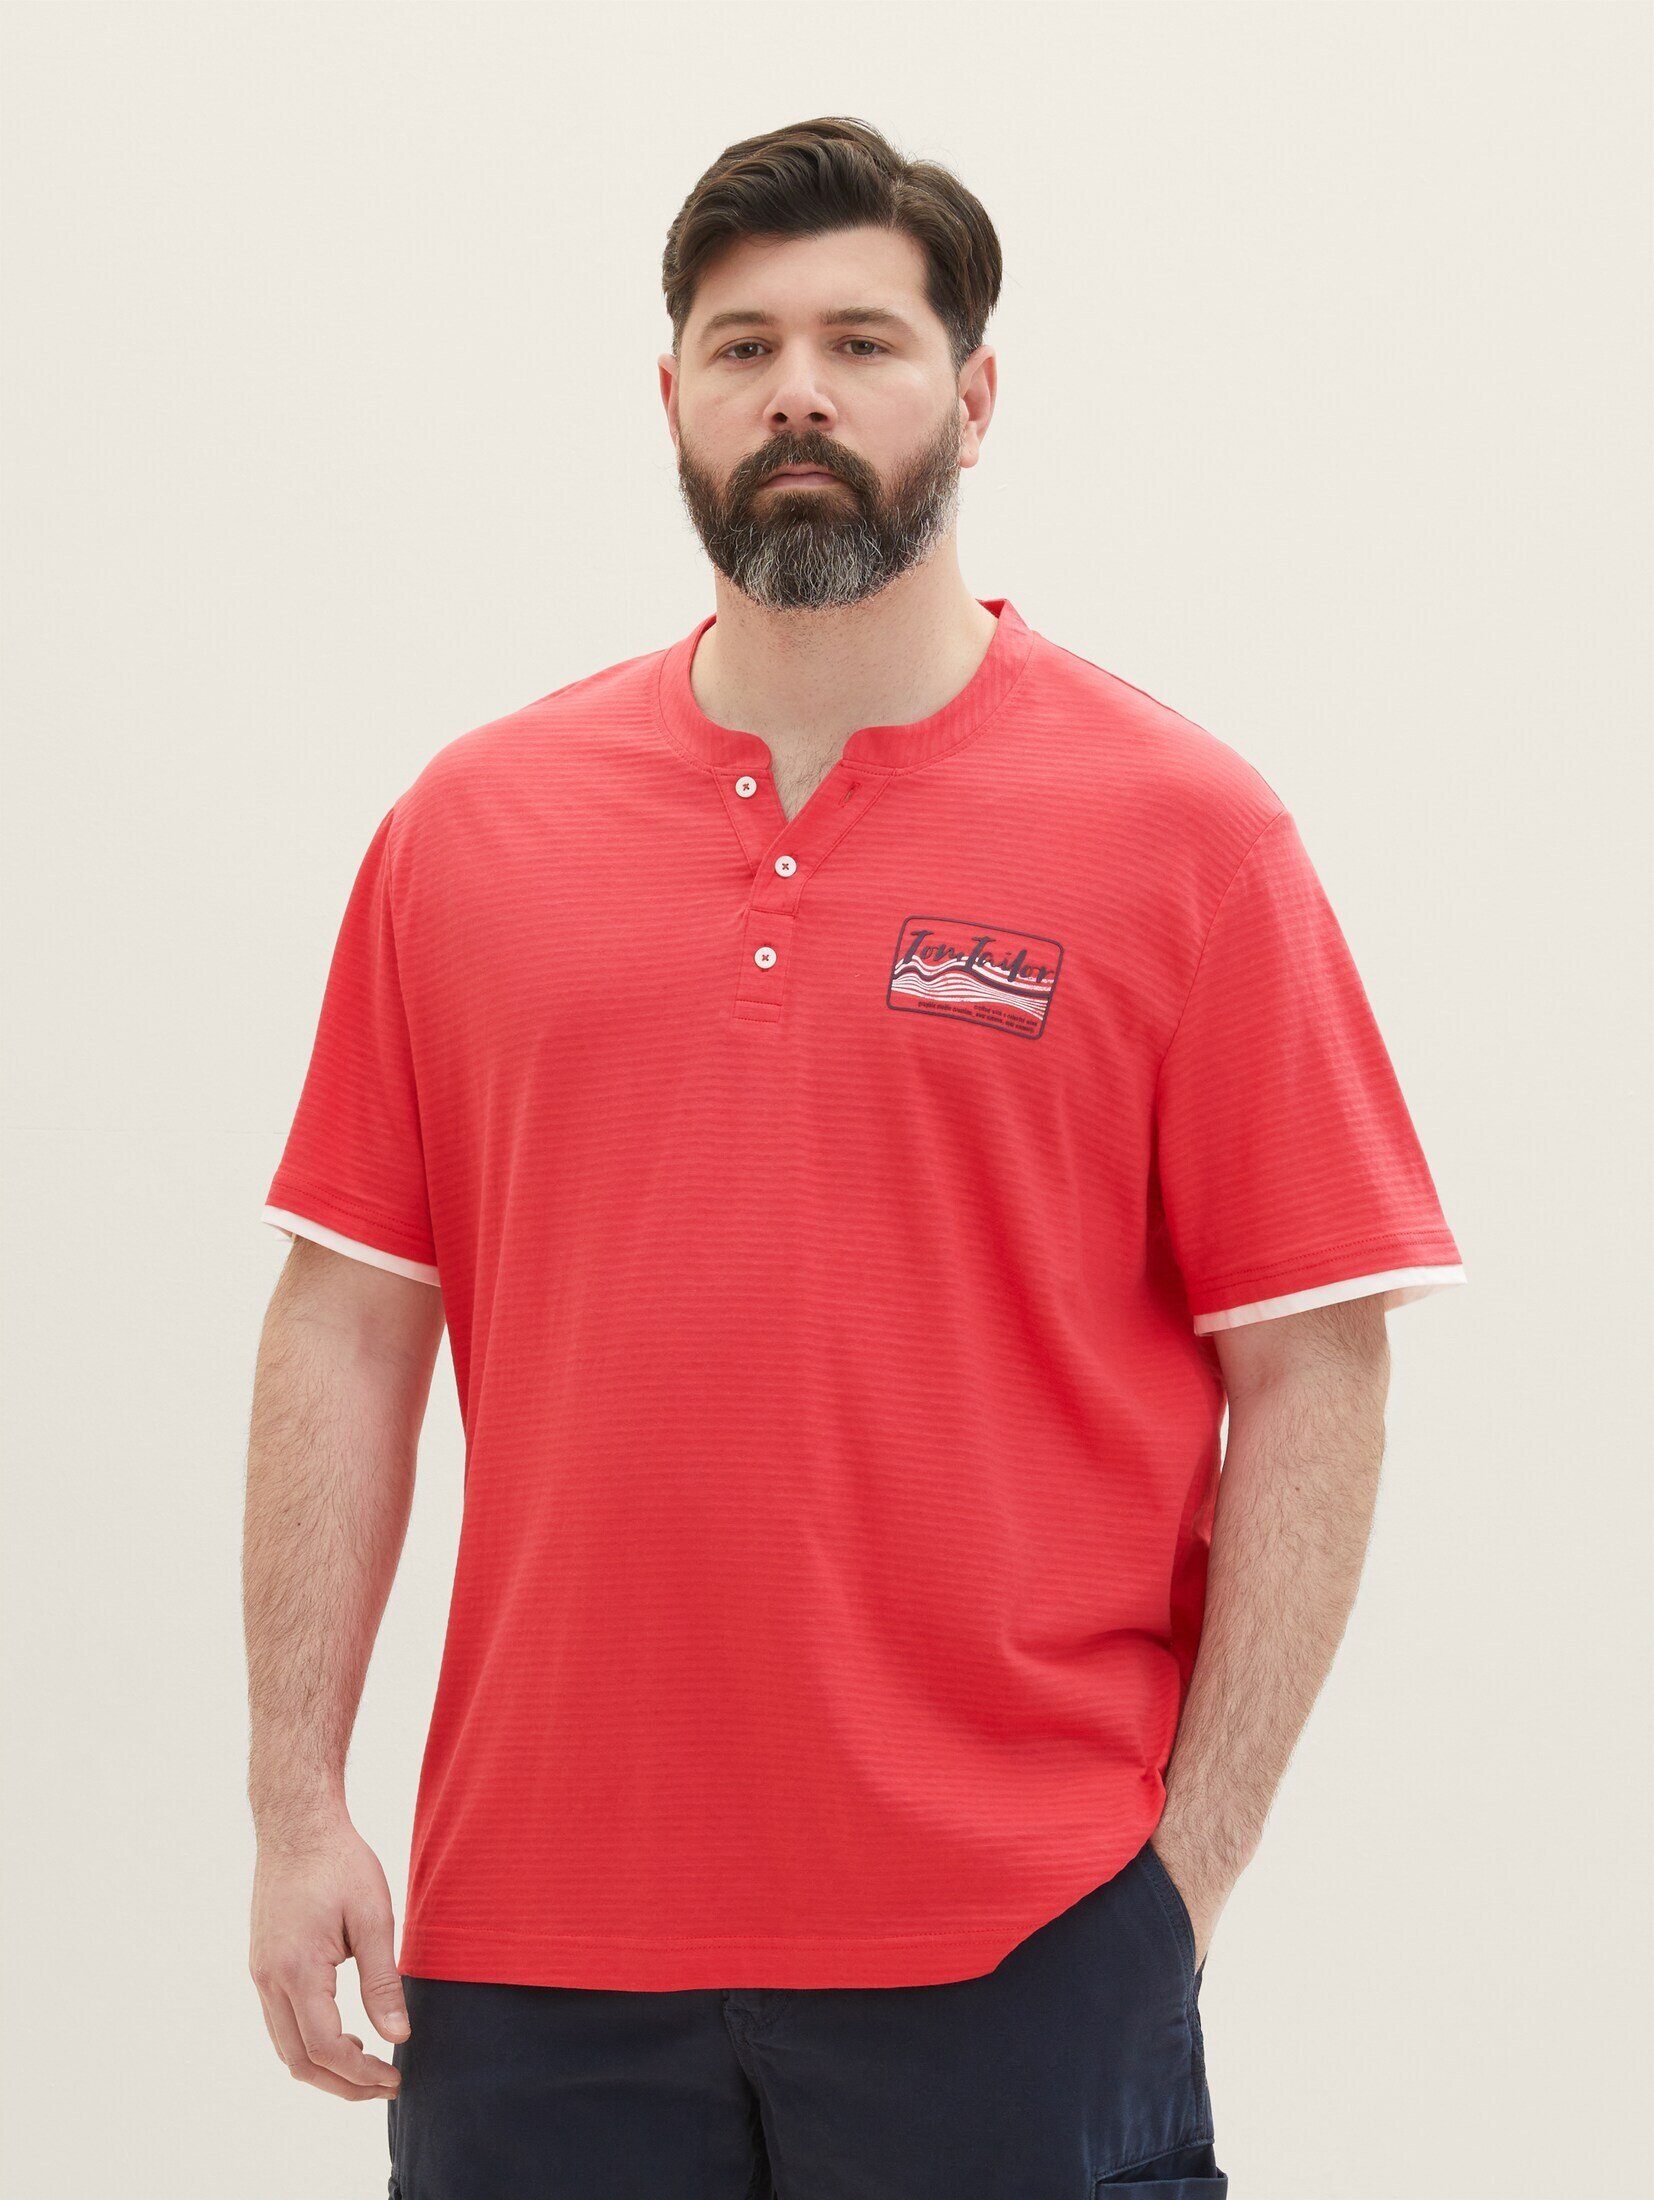 TOM TAILOR PLUS T-Shirt Plus berry - soft red T-Shirt Gestreiftes